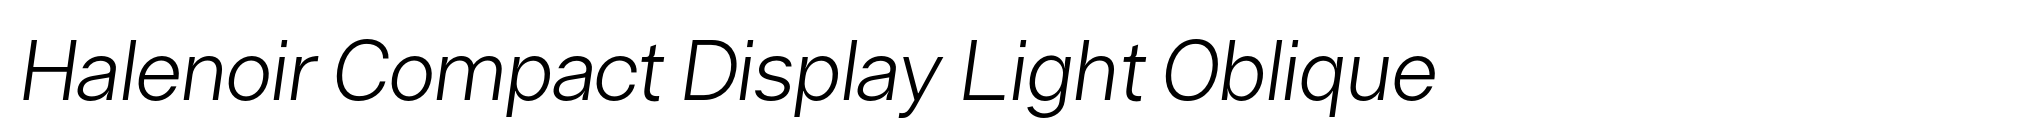 Halenoir Compact Display Light Oblique image